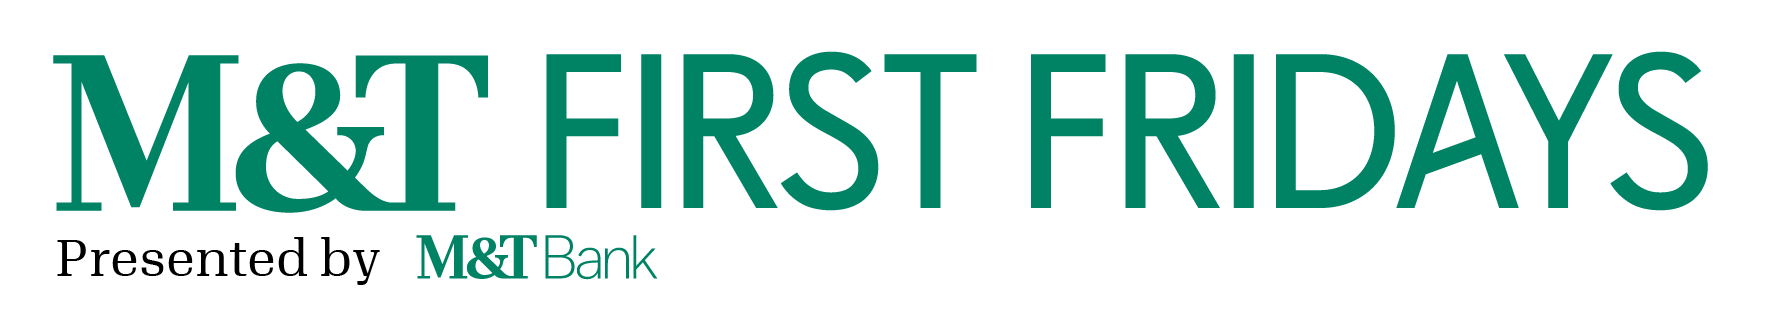 M&T FIRST FRIDAYS logo